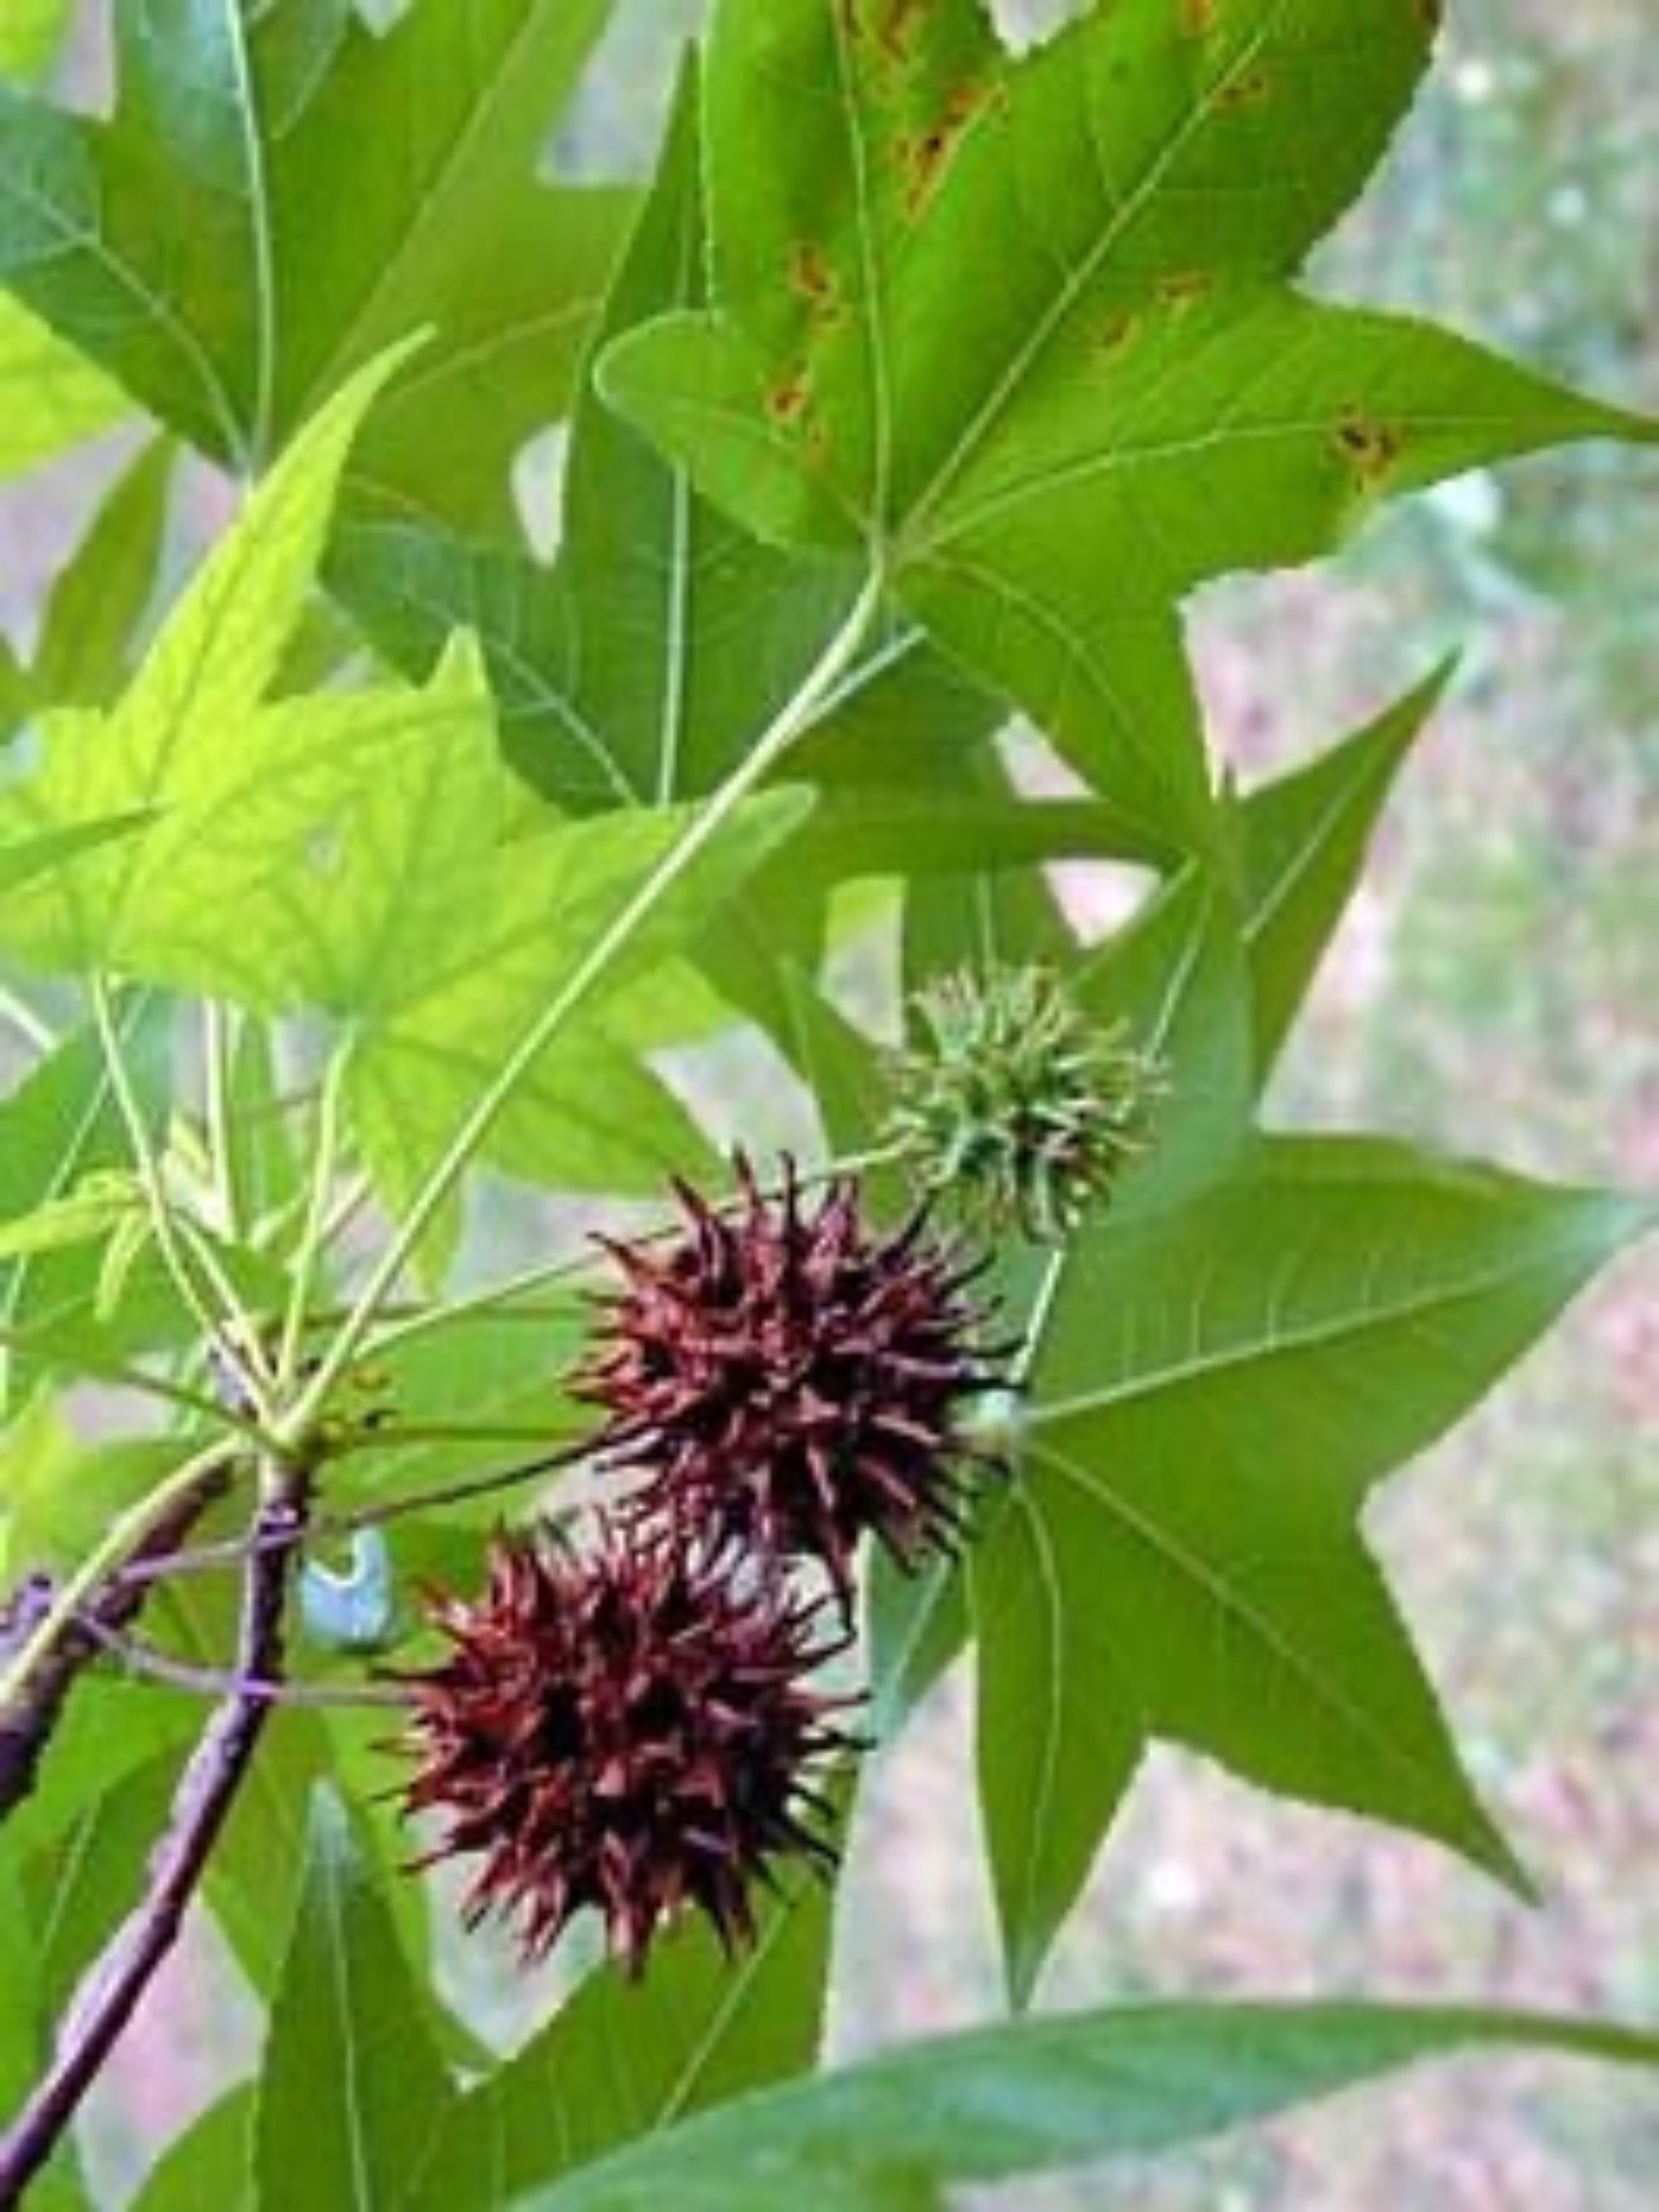 Sweetgum tree leaf is host plant for luna moth